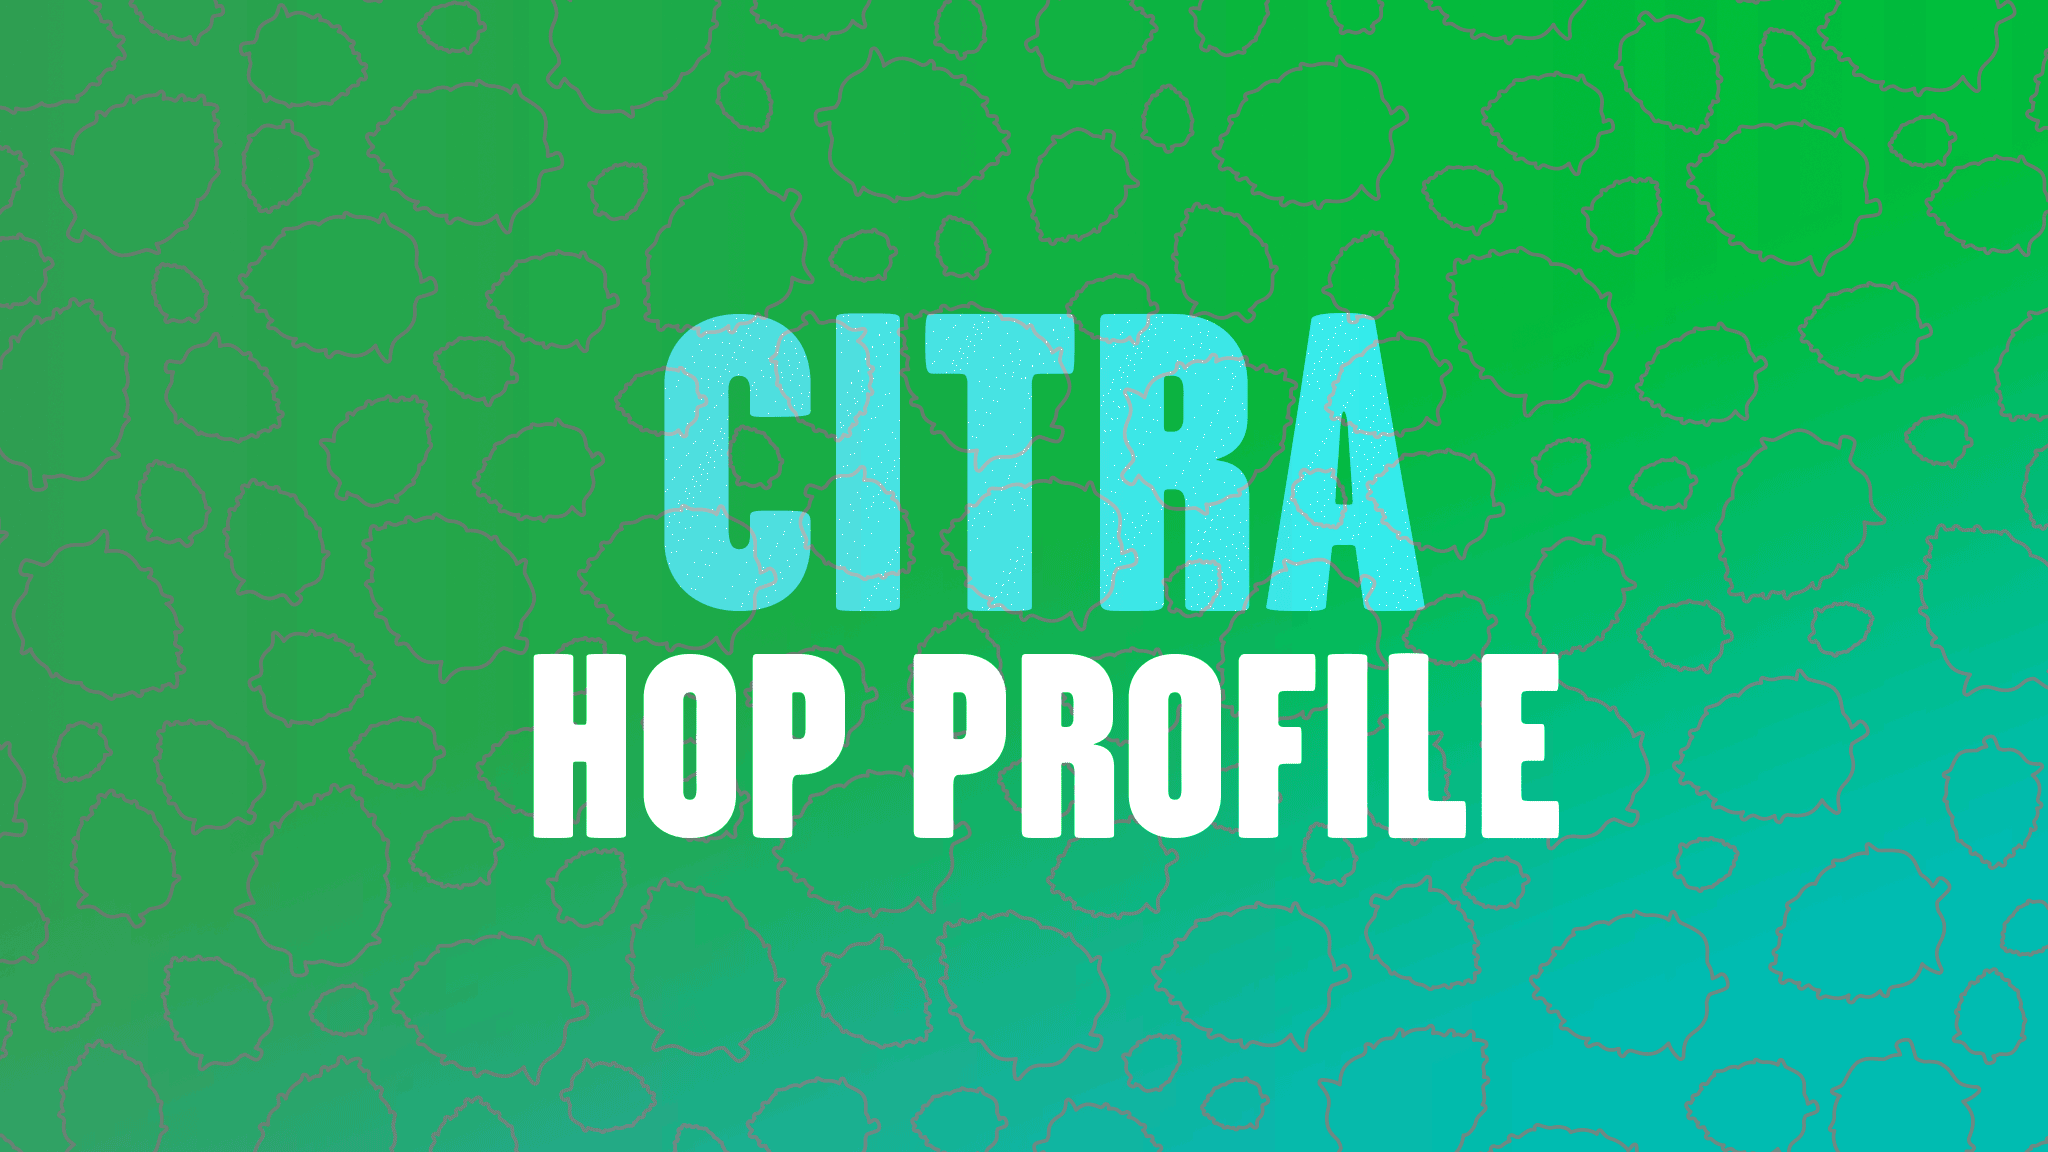 Hop Profile: Citra